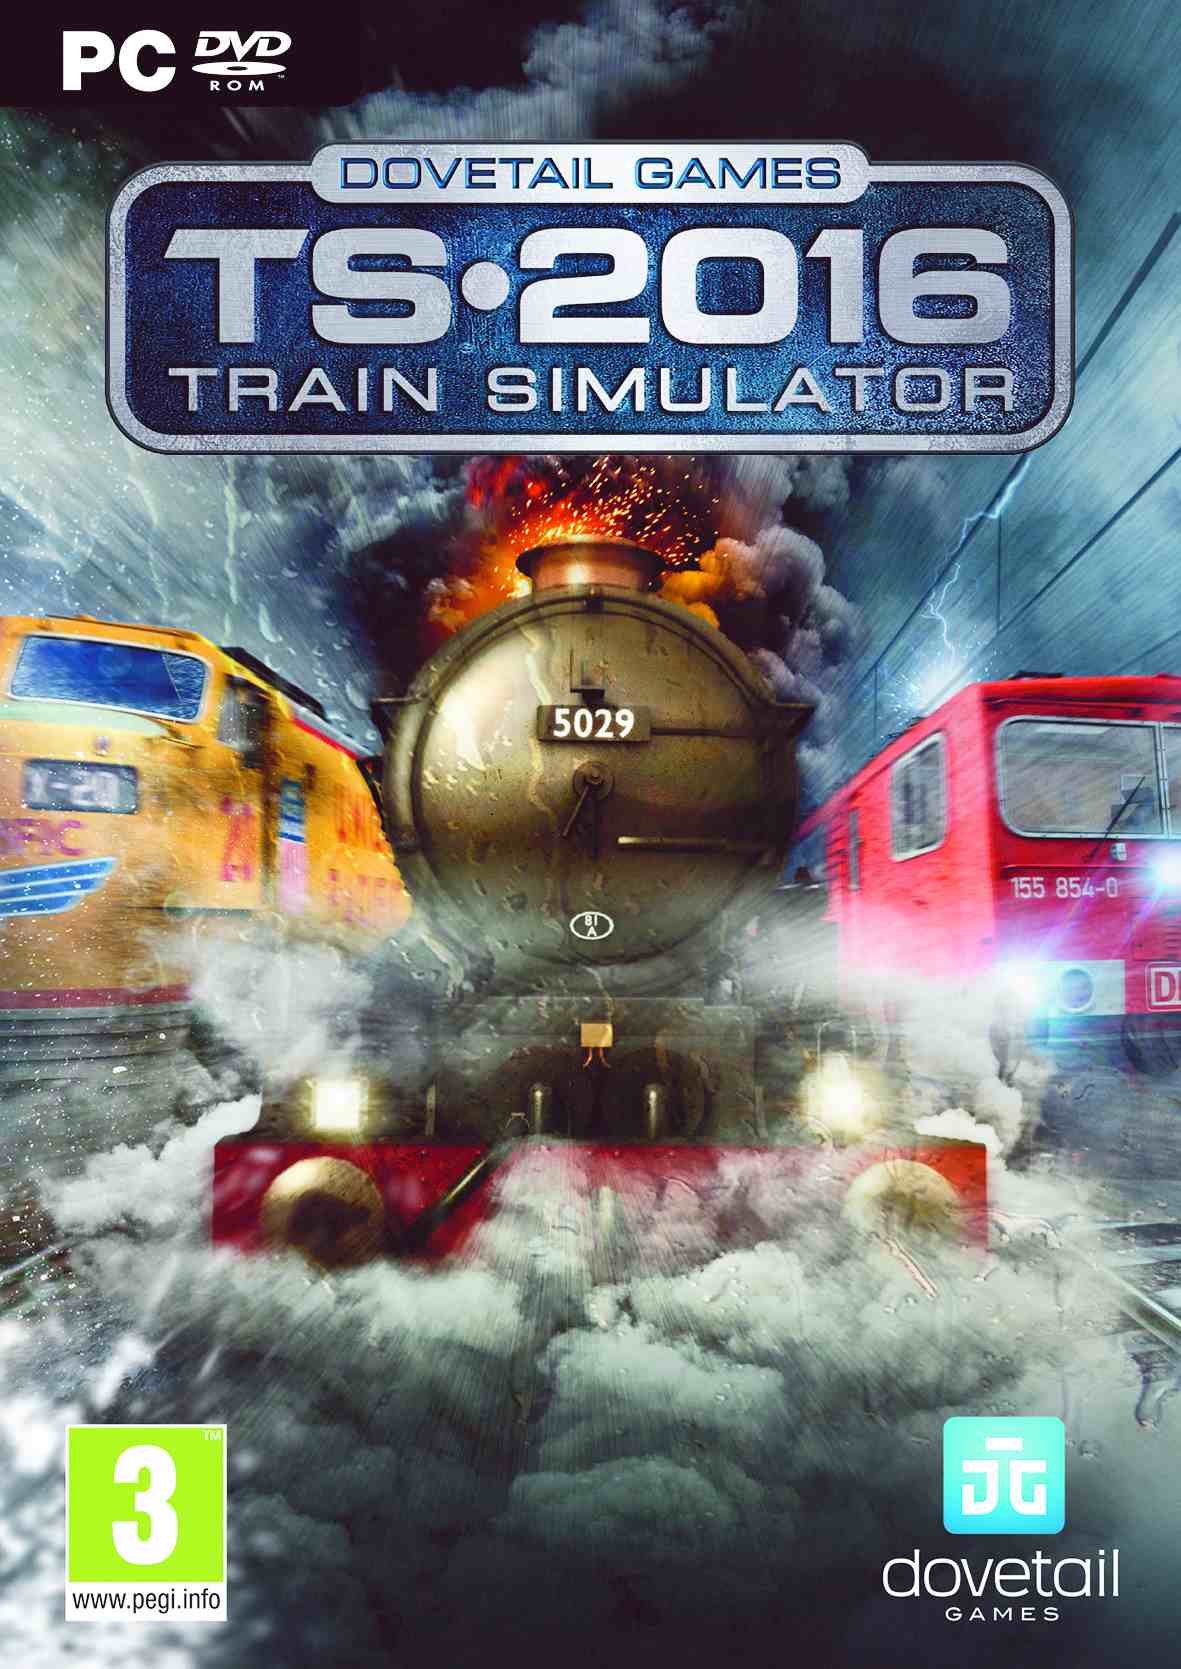 Train Simulator 2016: Steam Edition (2015) PC | Лицензия